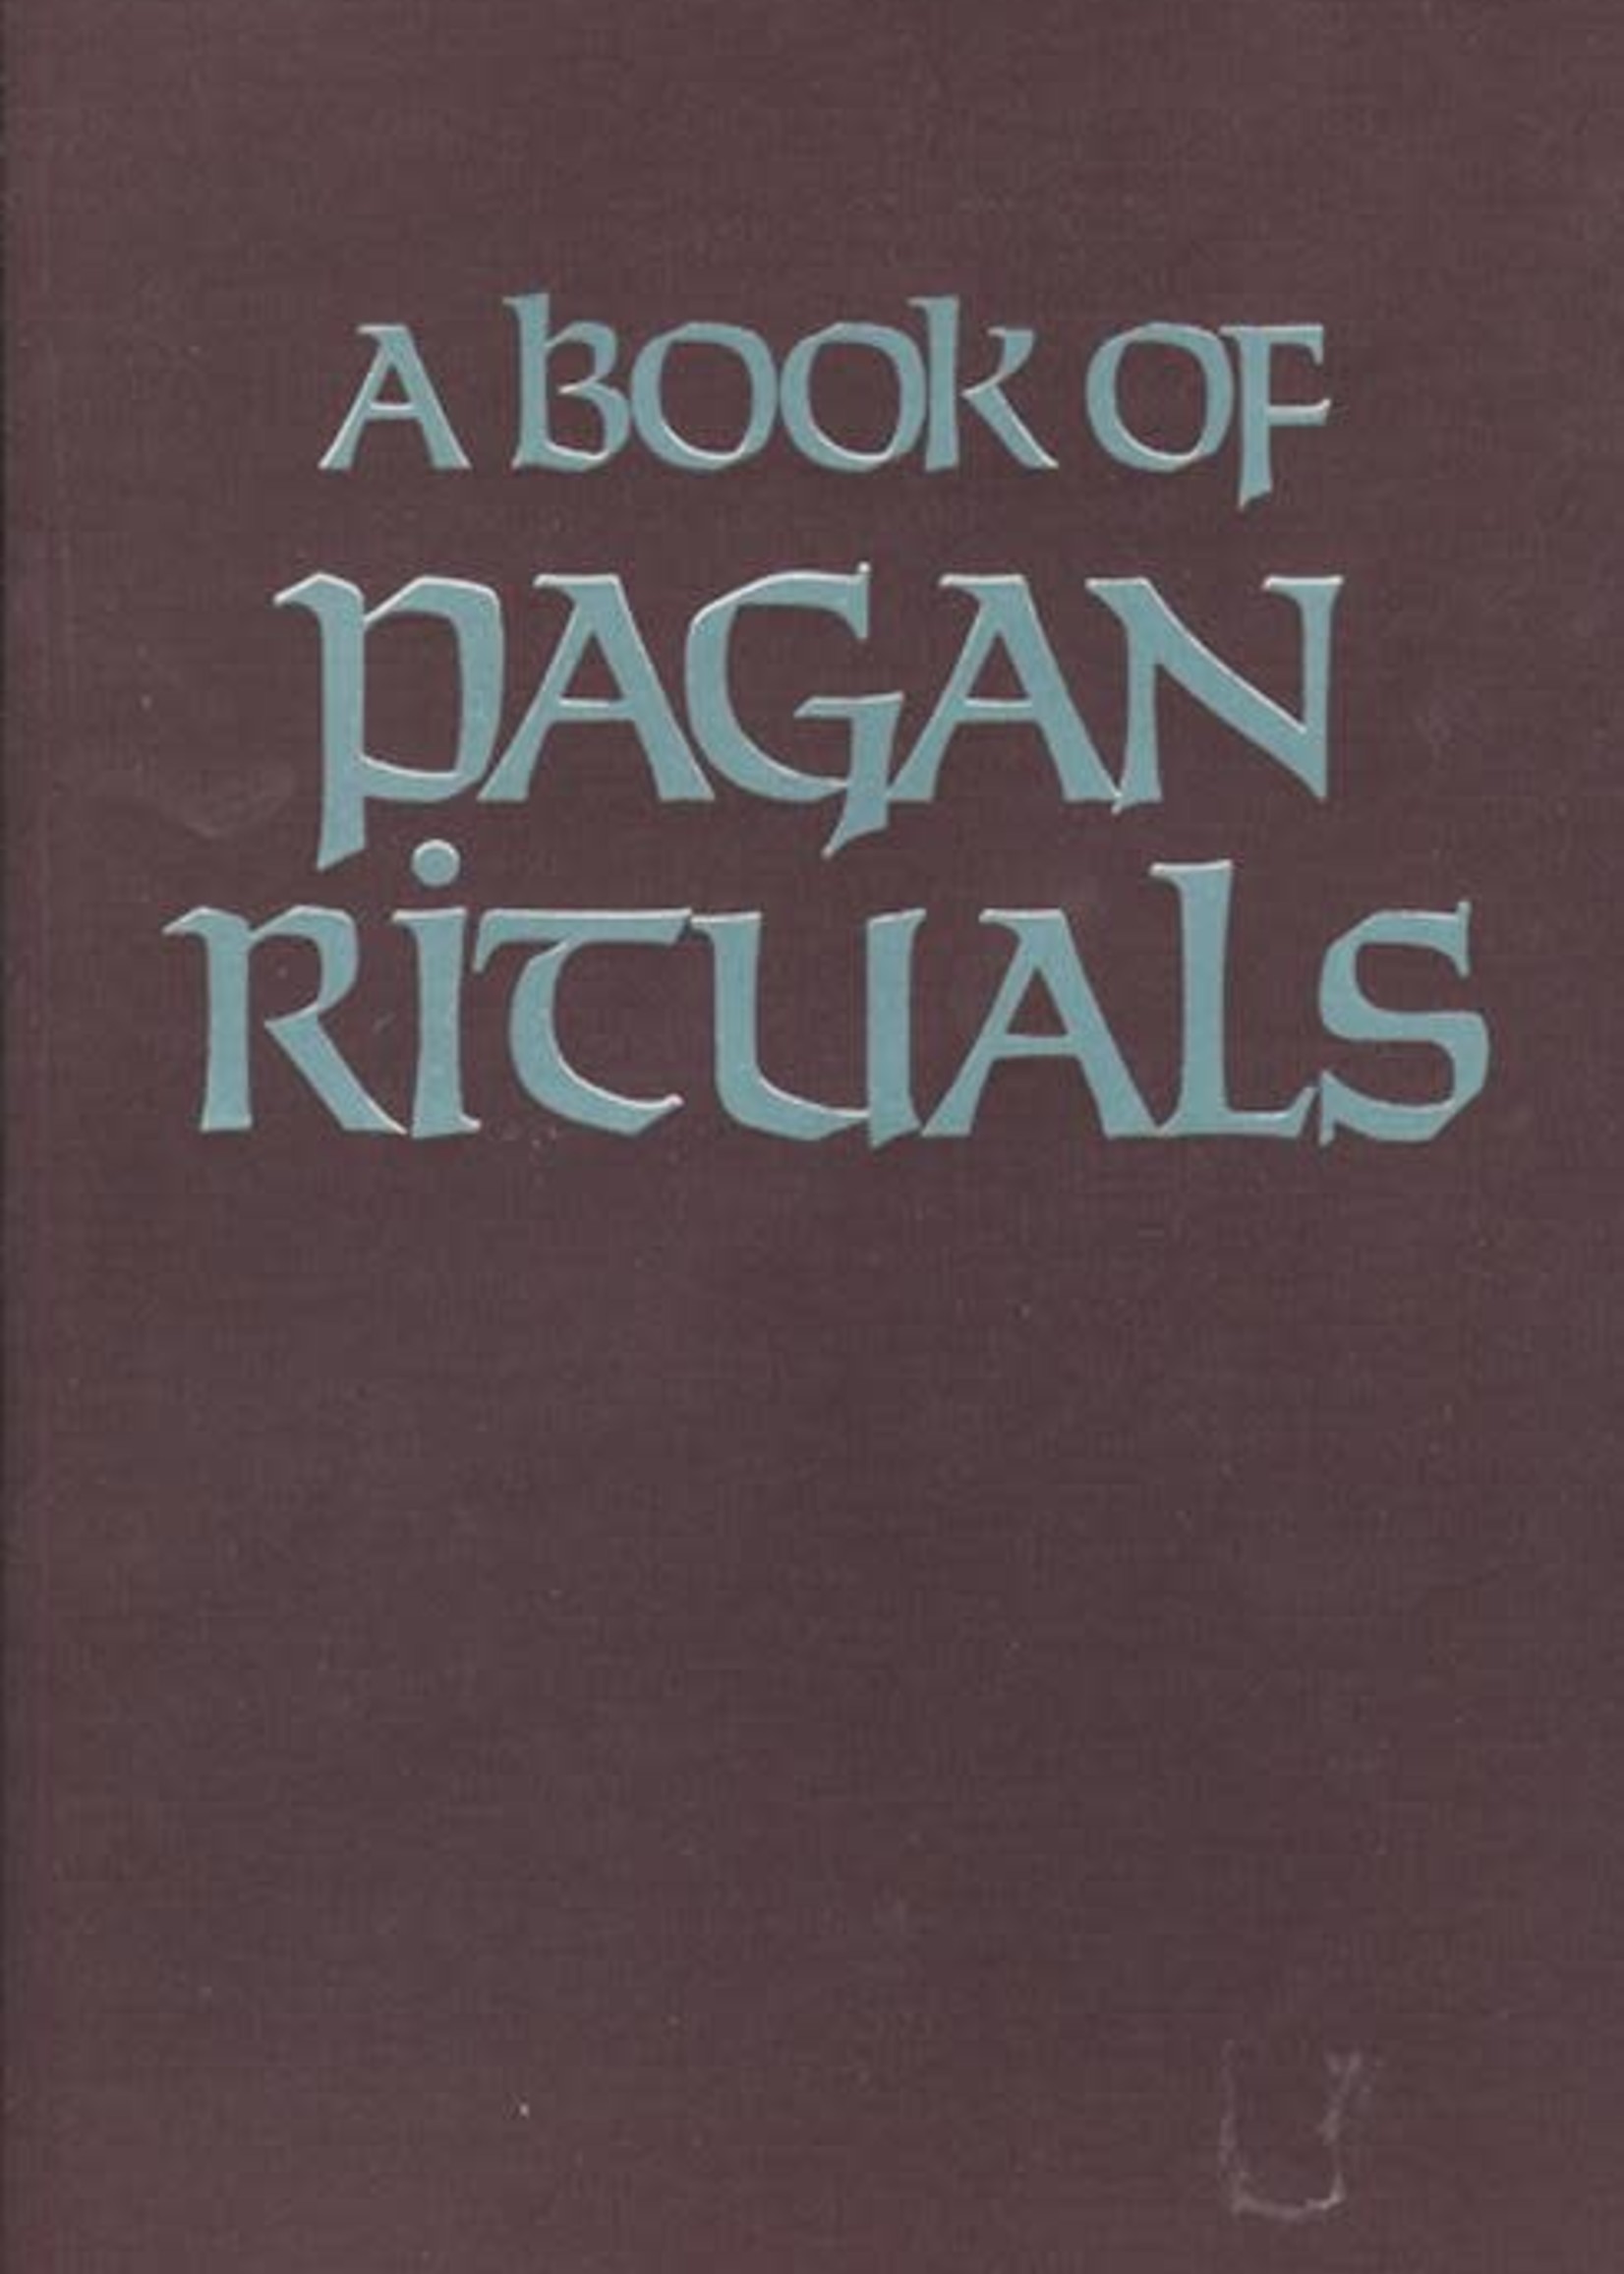 A Book of Pagan Rituals (Herman Slater)